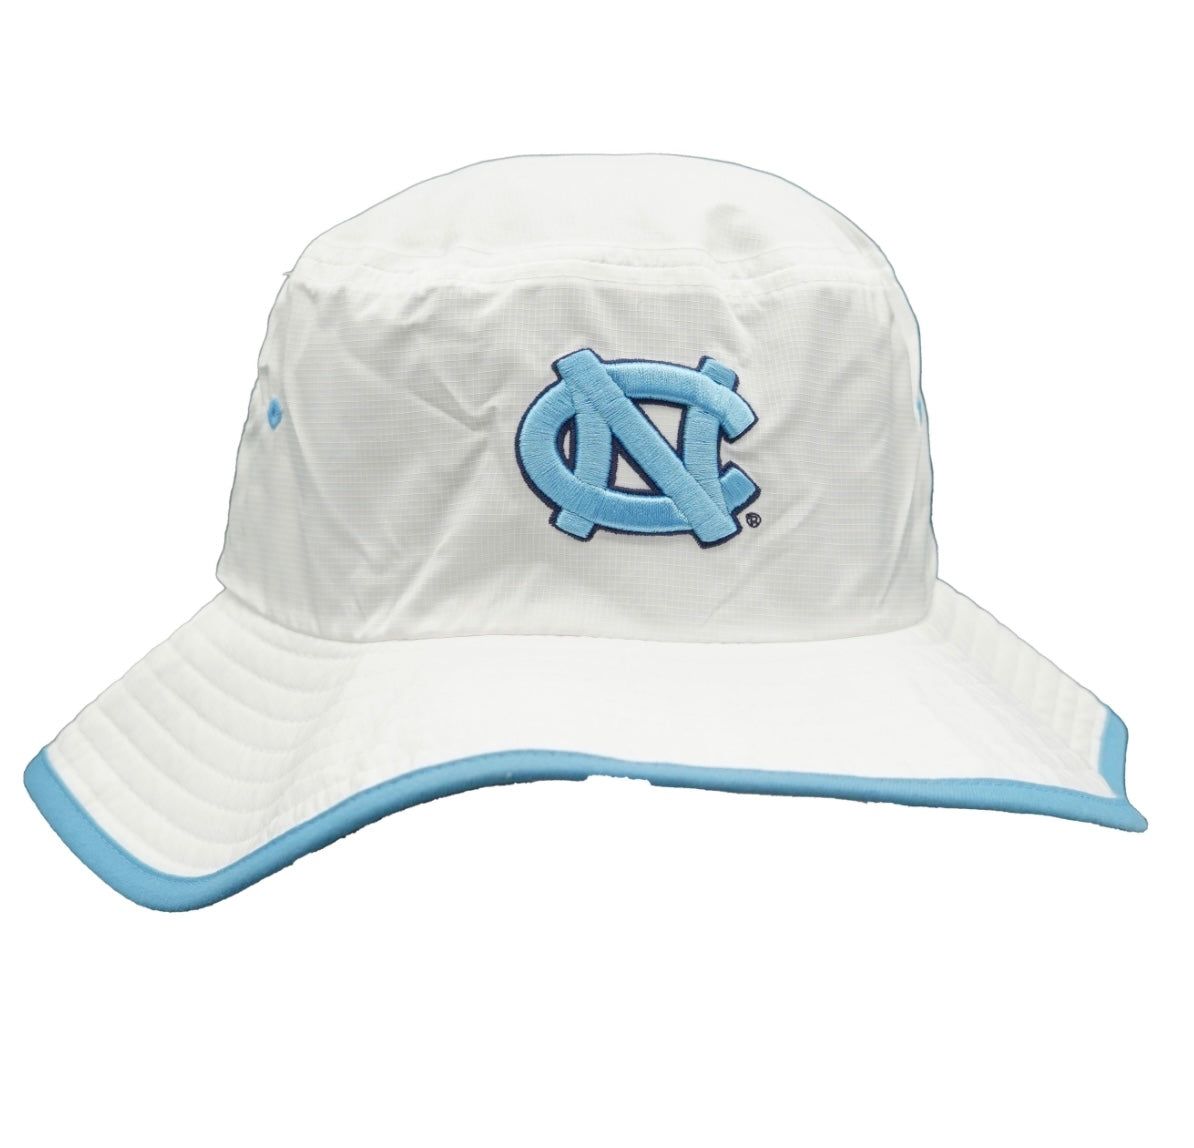 UNC White Bucket Hat with Carolina Blue Trim OTA